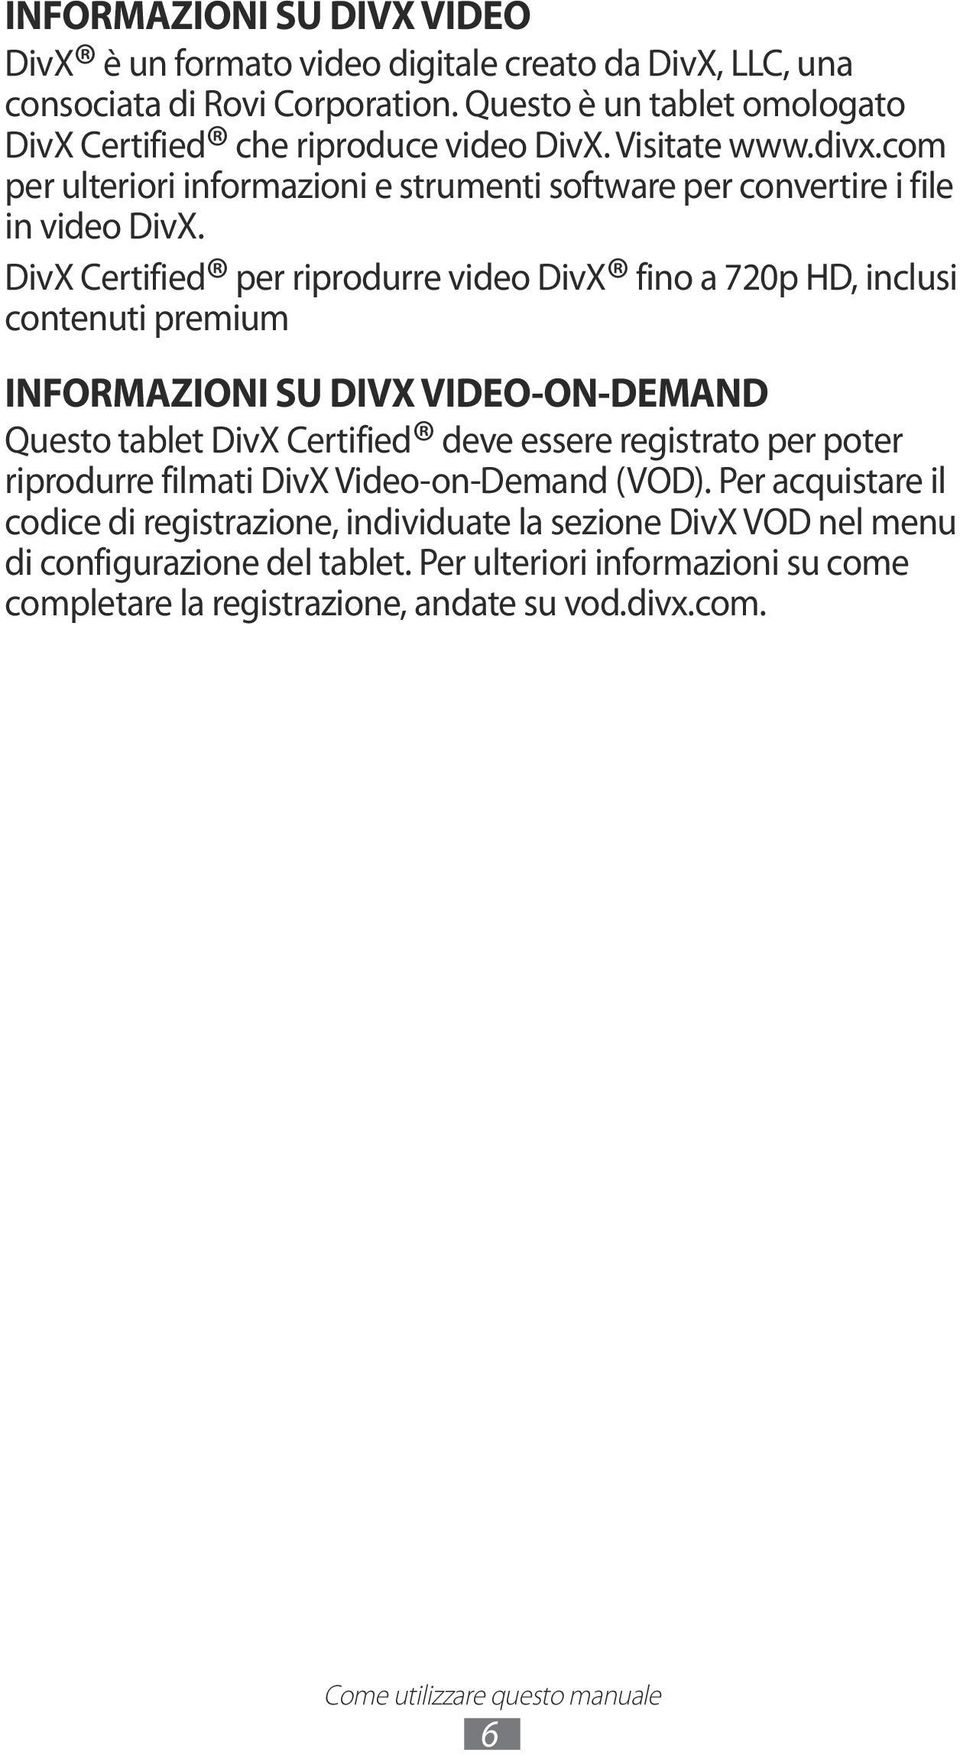 DivX Certified per riprodurre video DivX fino a 720p HD, inclusi contenuti premium INFORMAZIONI SU DIVX VIDEO-ON-DEMAND Questo tablet DivX Certified deve essere registrato per poter